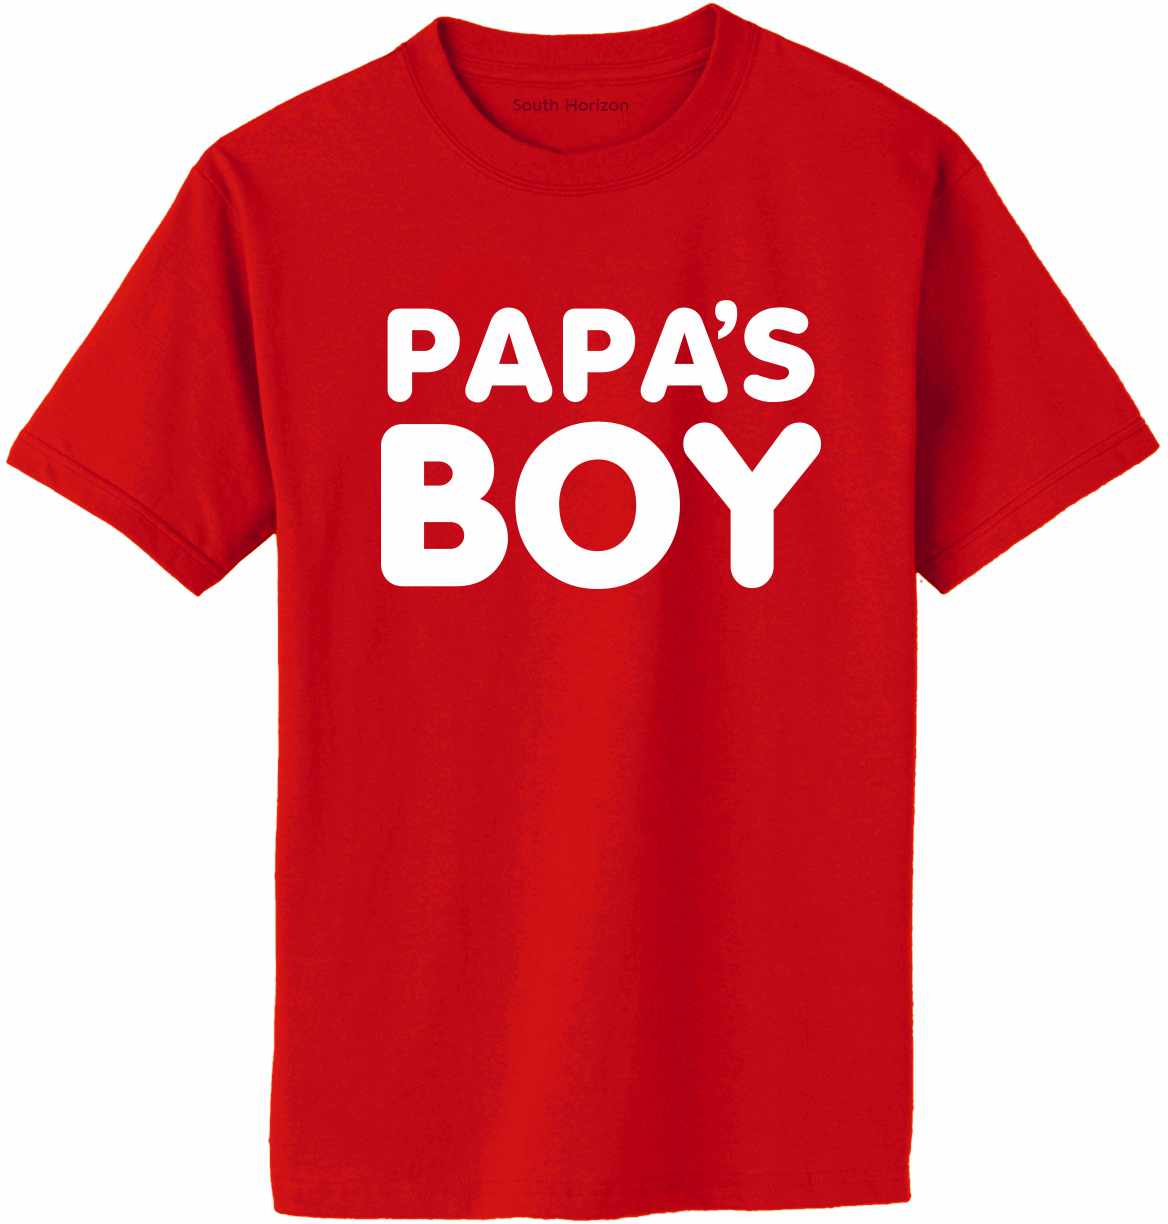 Papa's Boy on Adult T-Shirt (#1217-1)